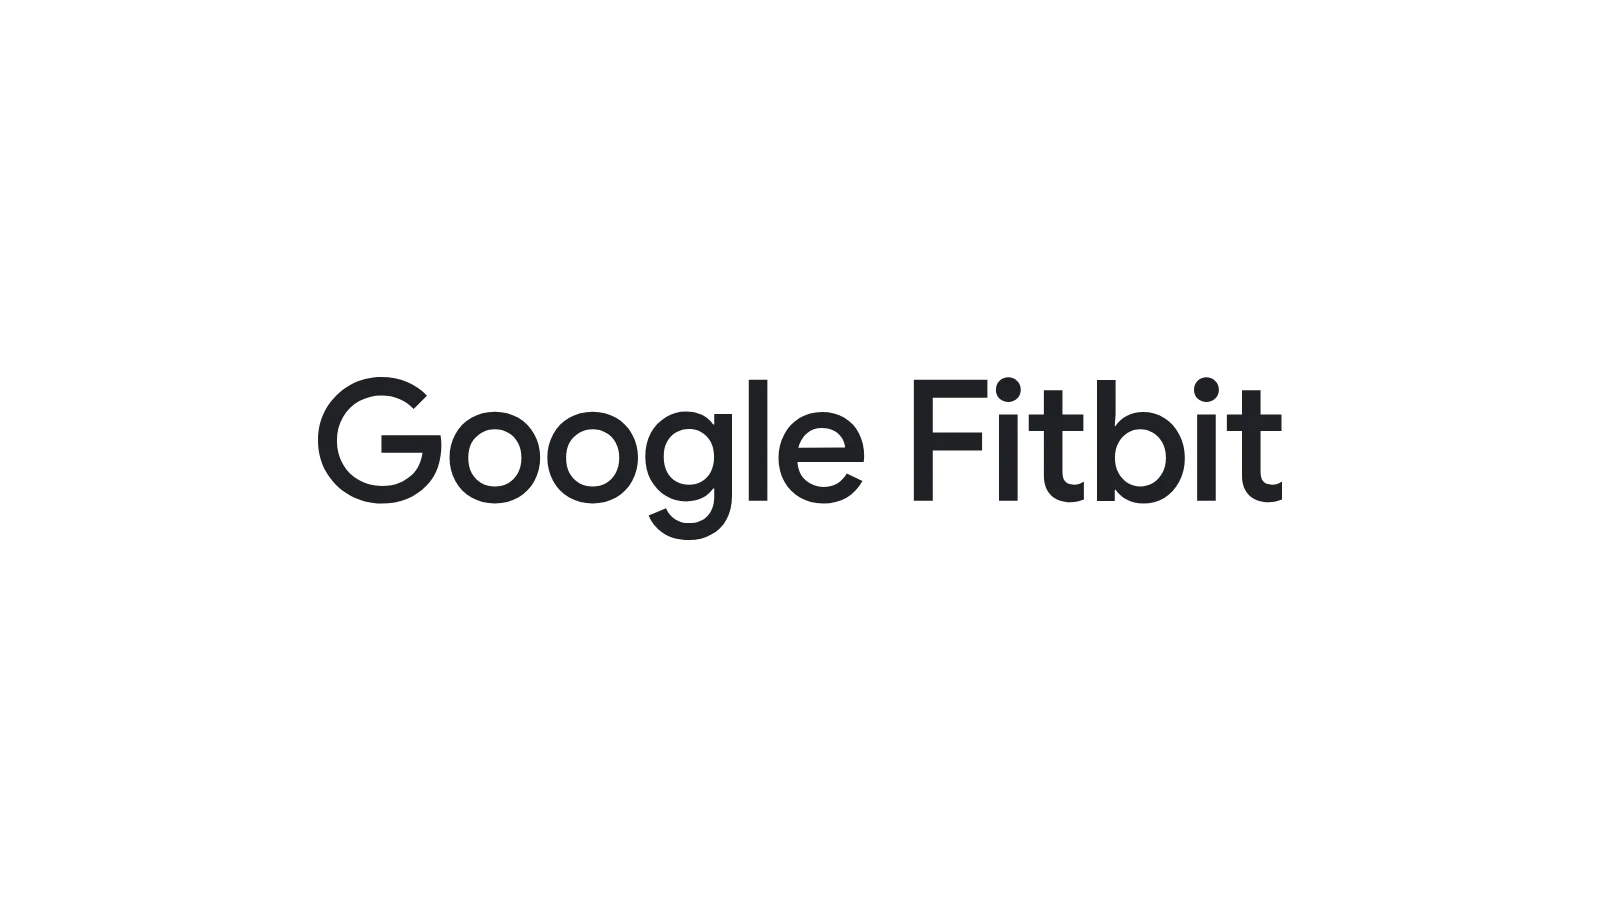 Google Fitbit (fitbit by Google) の新しいロゴ